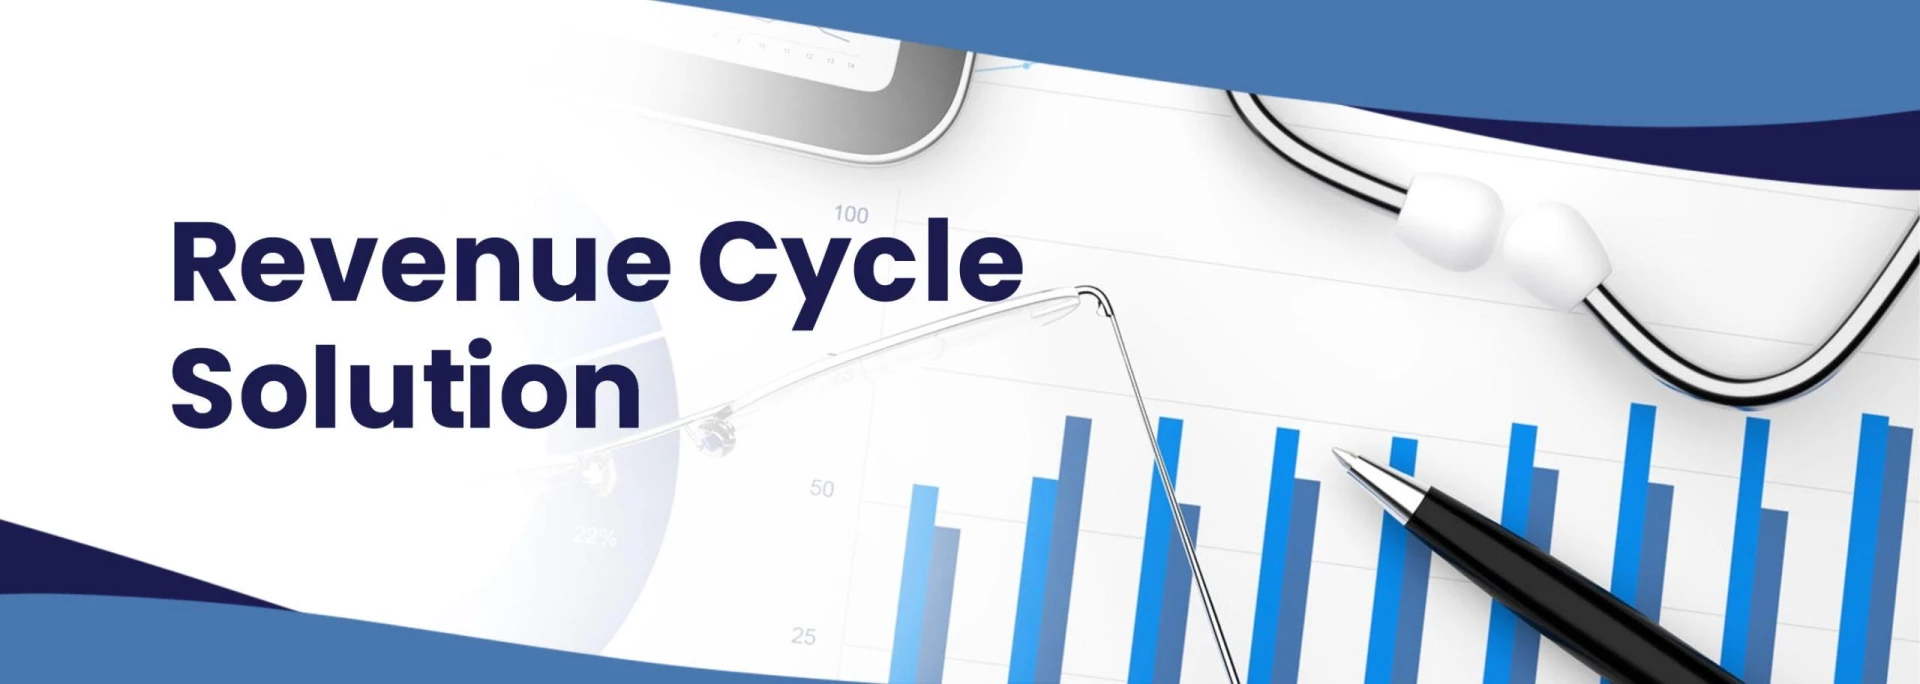 revenue-cycle-solution m